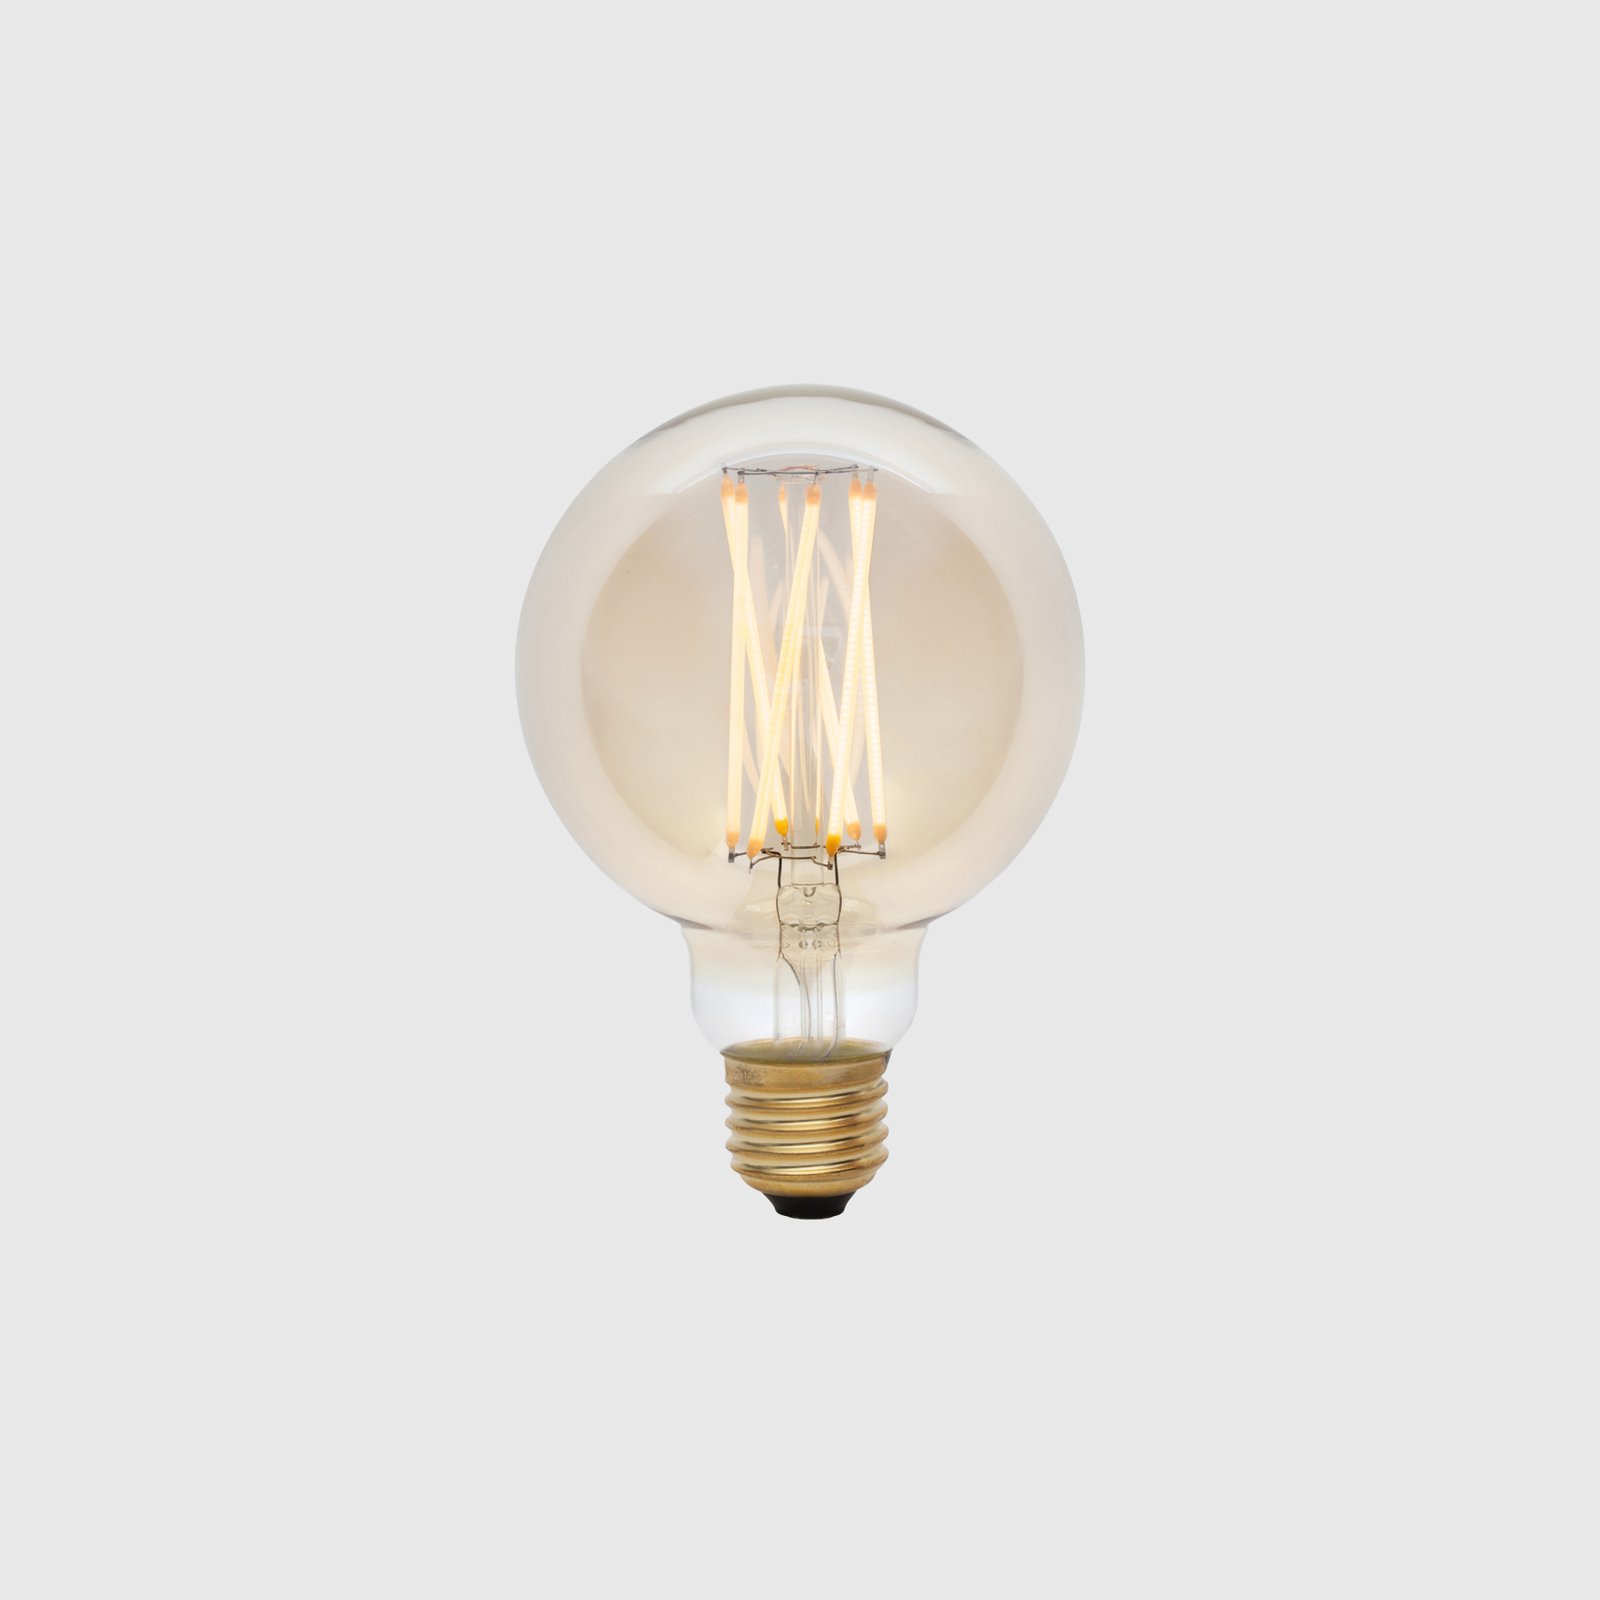 Tala LED globe bulb G95 Filament E27 6W 2200K 420 lm dimmable.